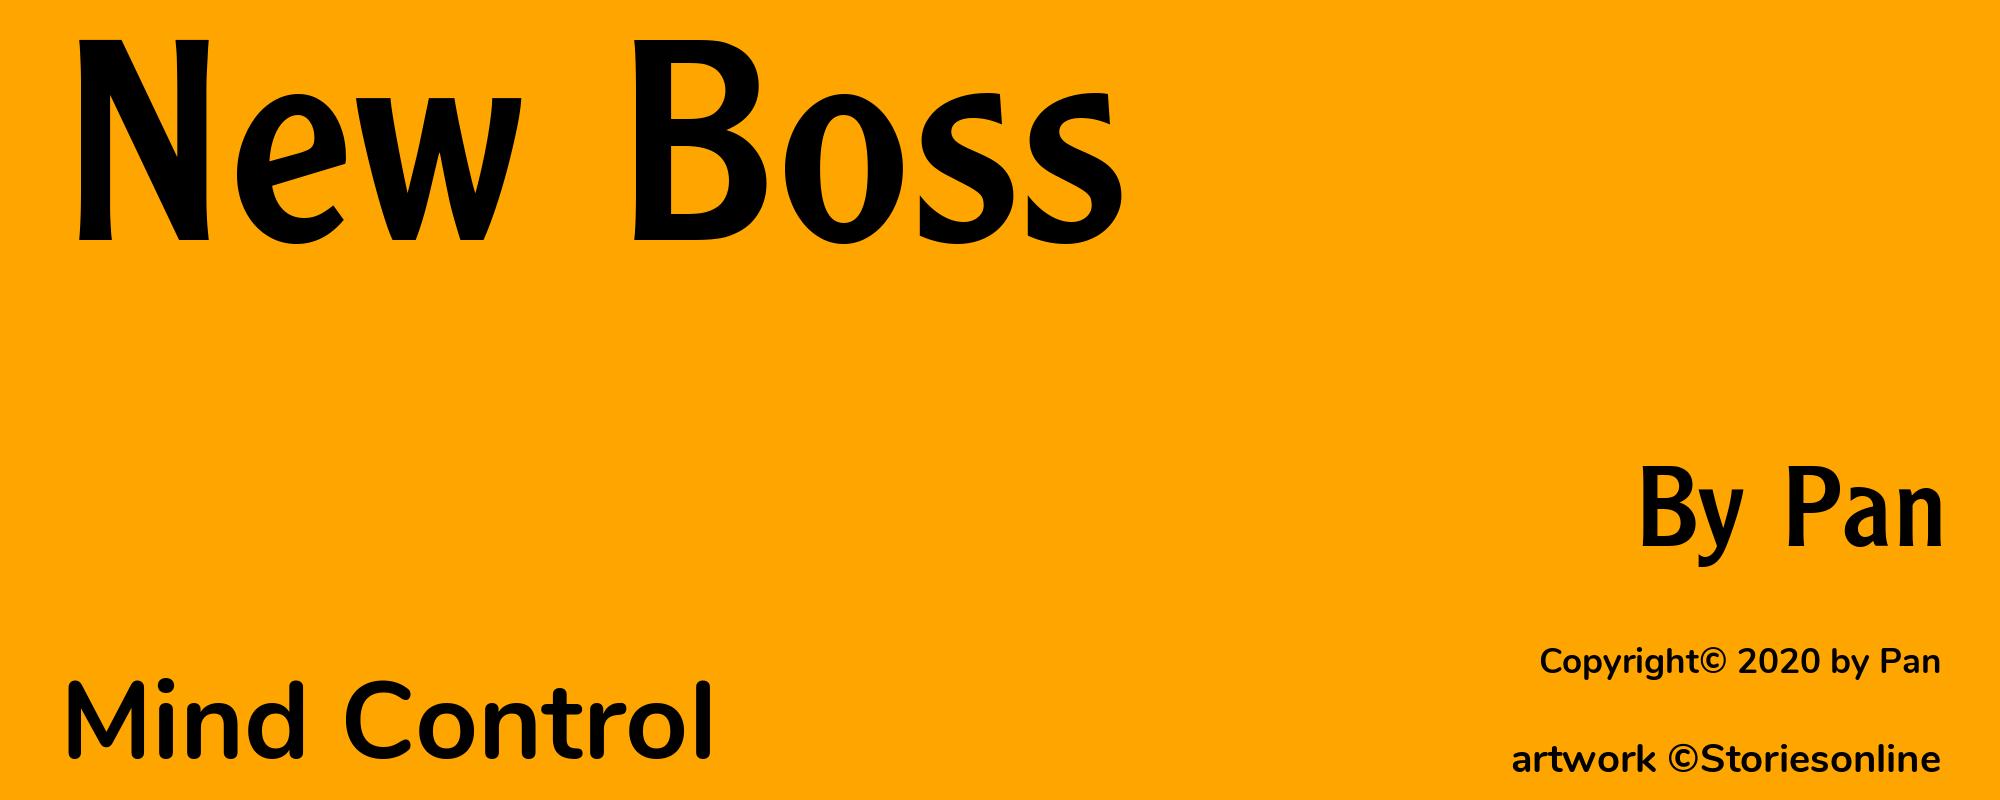 New Boss - Cover